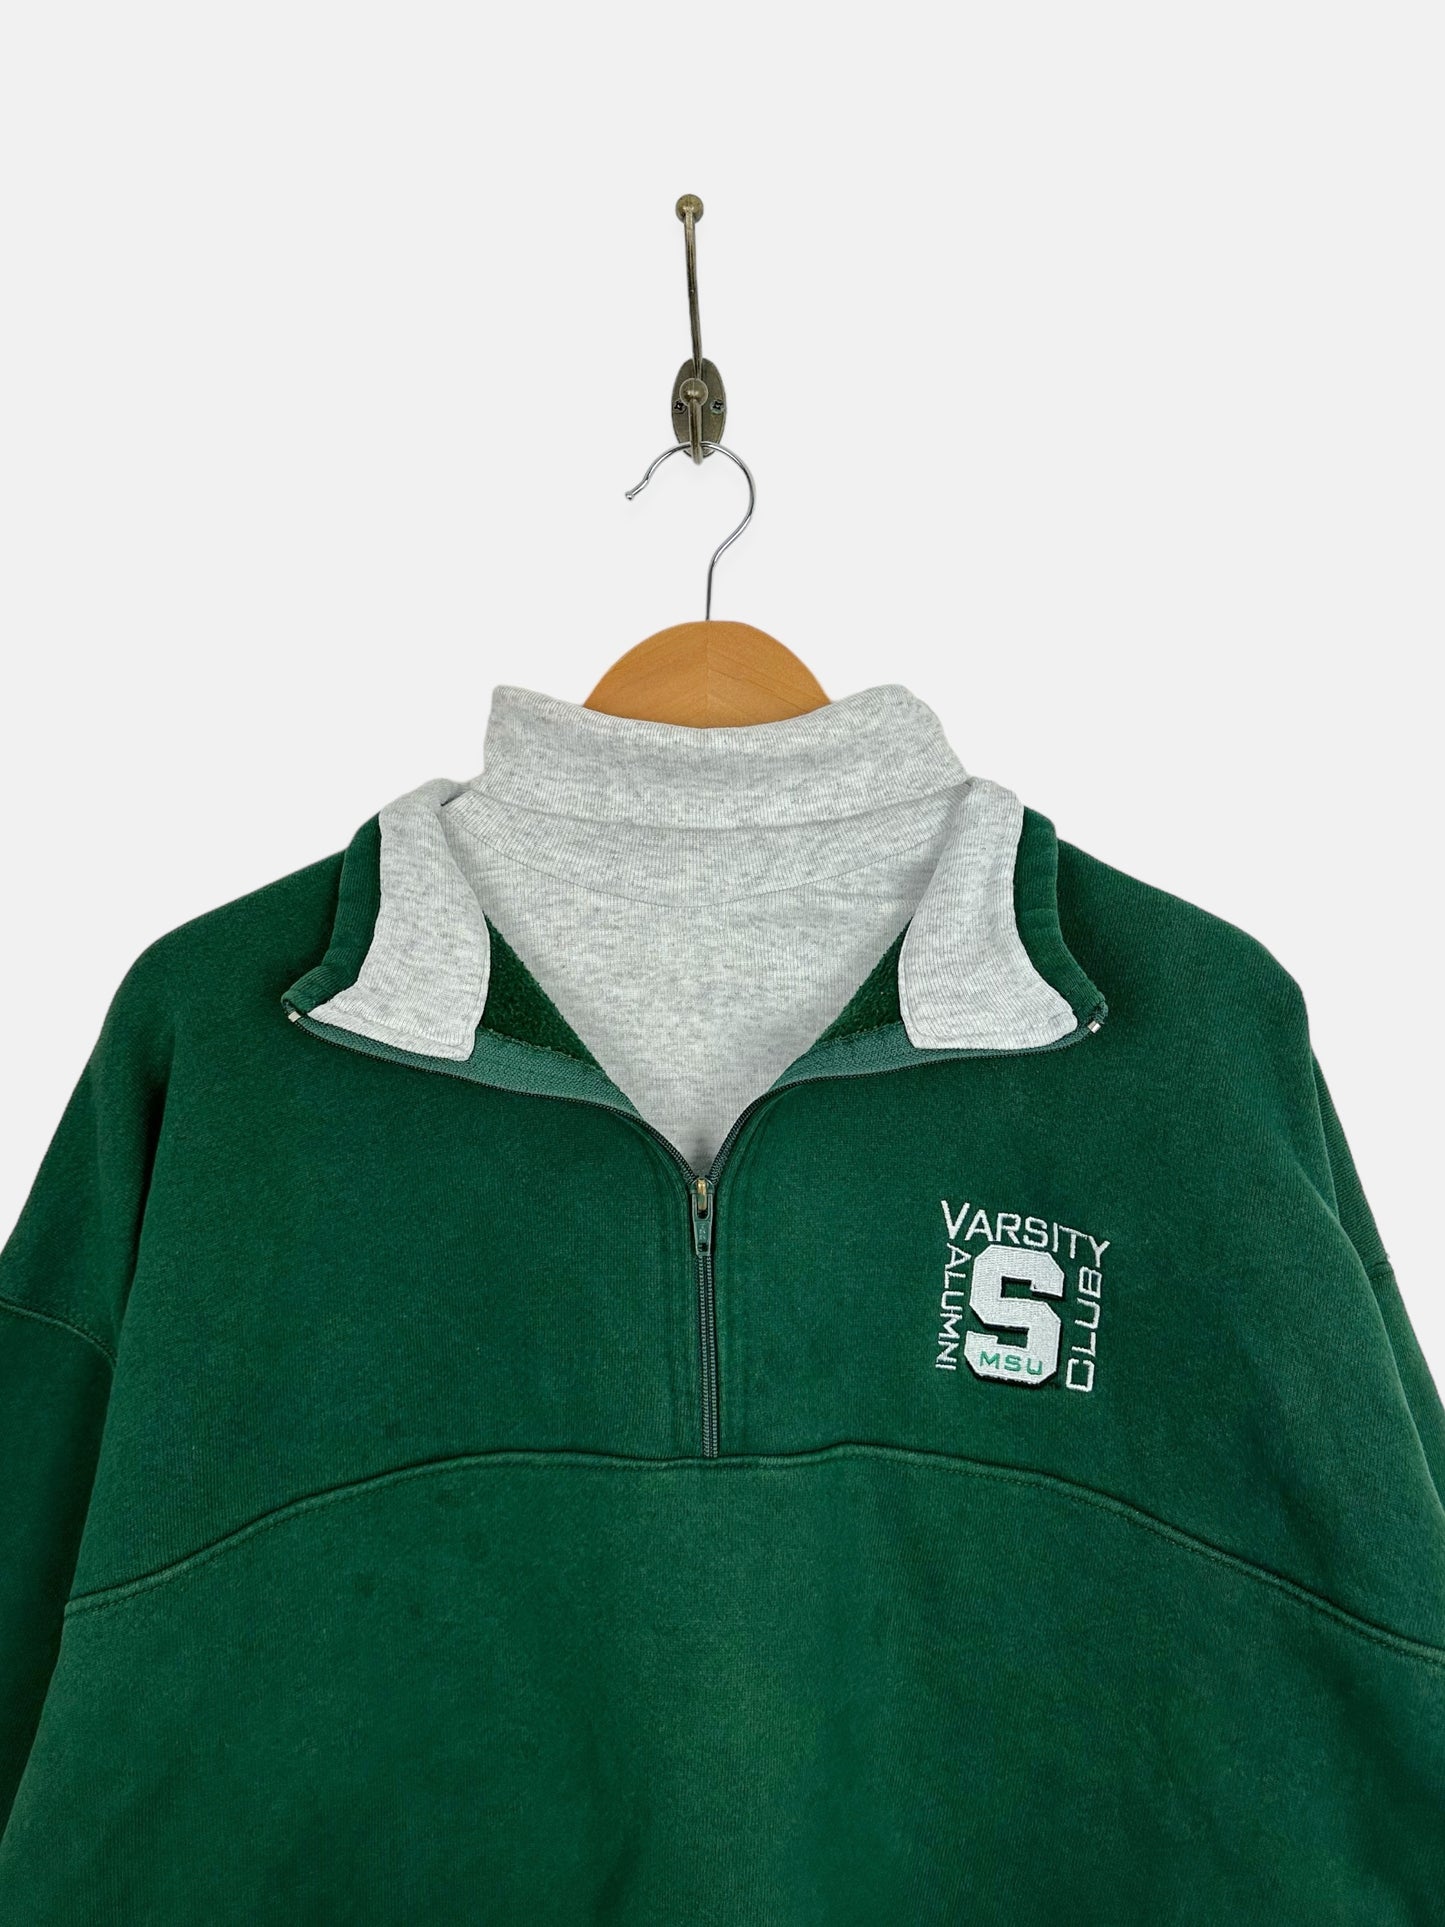 90's MSU Alumni Varsity Club Embroidered Vintage Quarterzip Sweatshirt Size 12-14